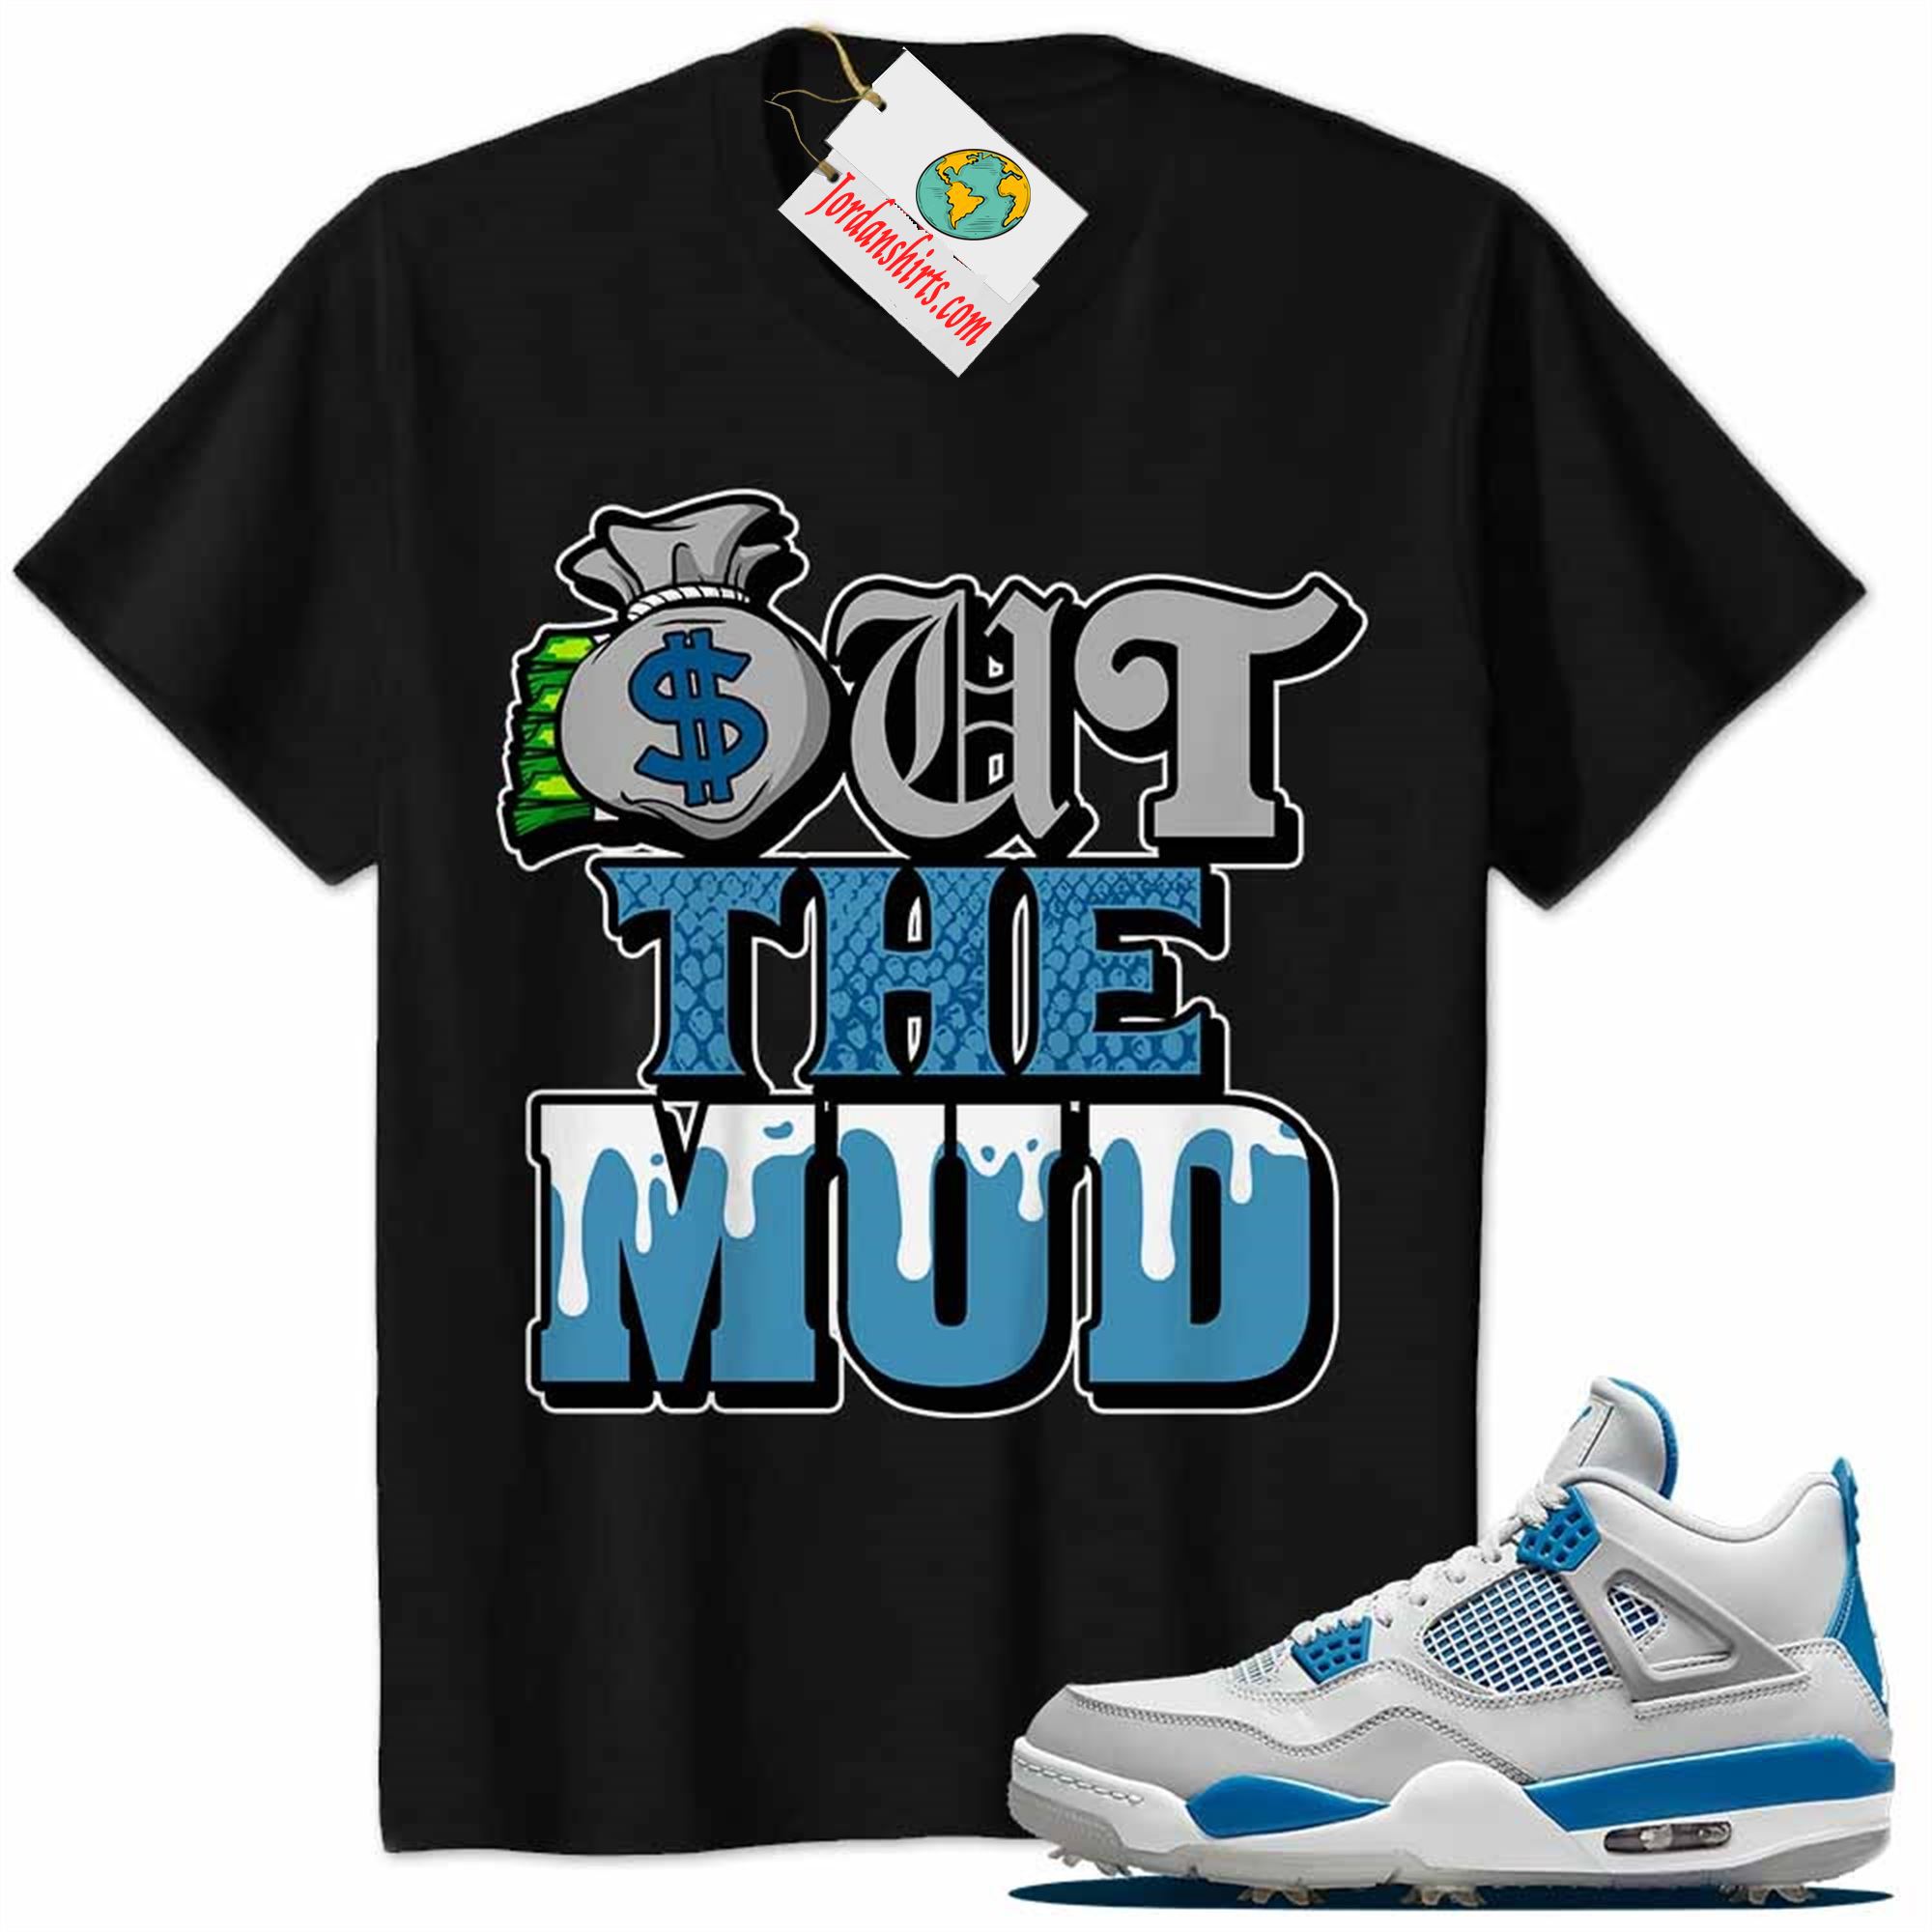 Jordan 4 Shirt, Jordan 4 Golf Military Blue Shirt Out The Mud Money Bag Black Size Up To 5xl